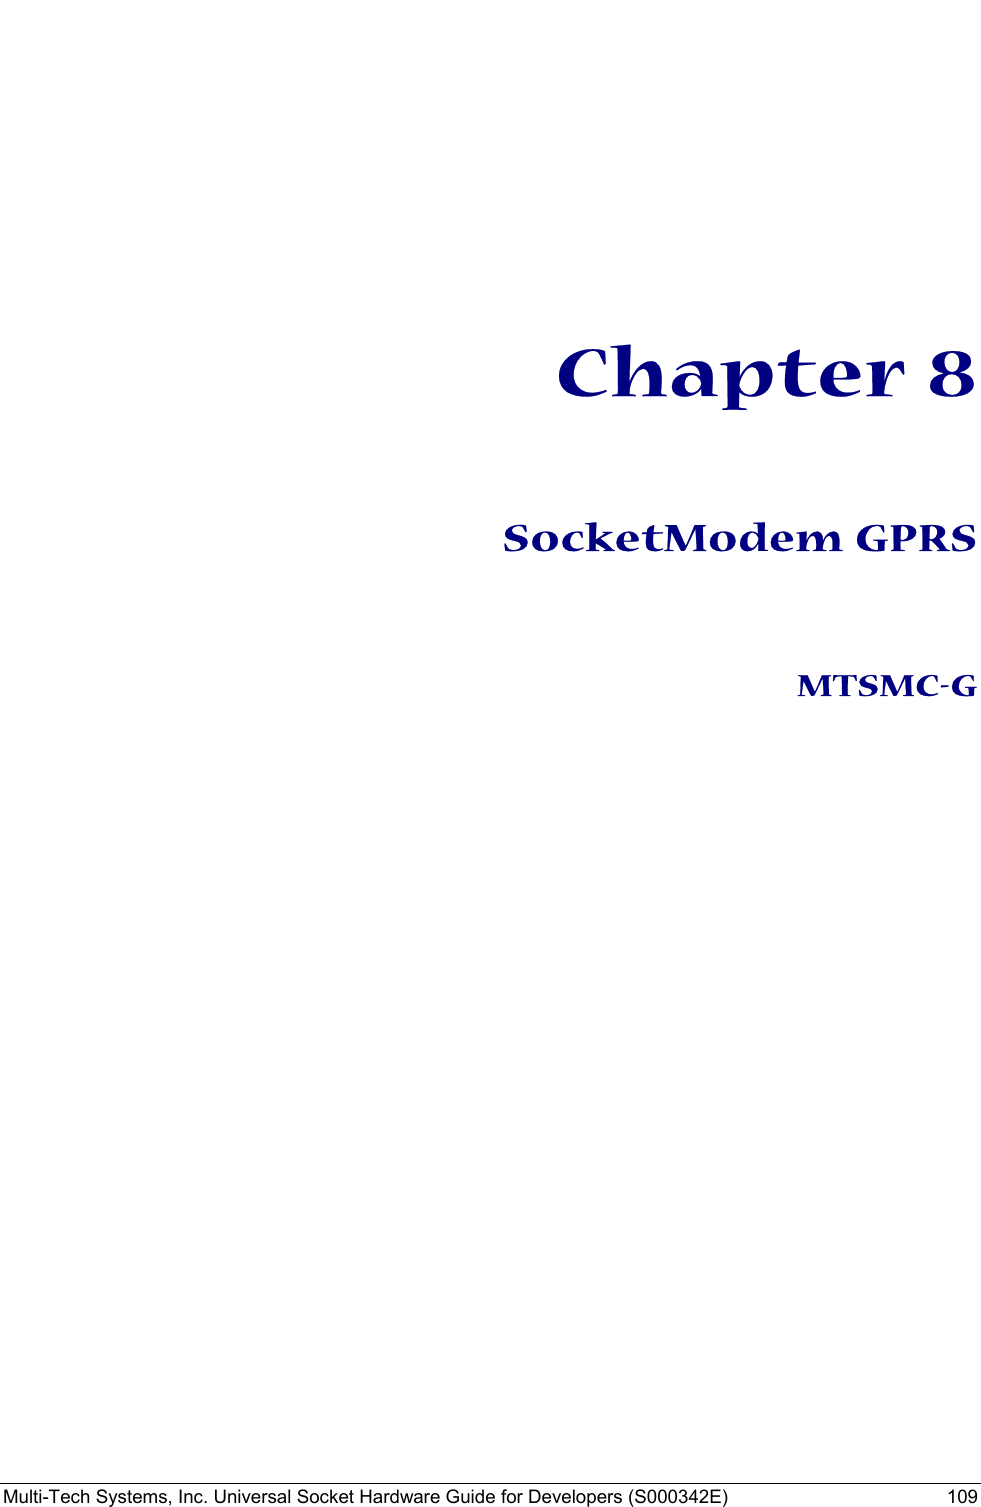  Multi-Tech Systems, Inc. Universal Socket Hardware Guide for Developers (S000342E)  109        Chapter 8   SocketModem GPRS   MTSMC-G   